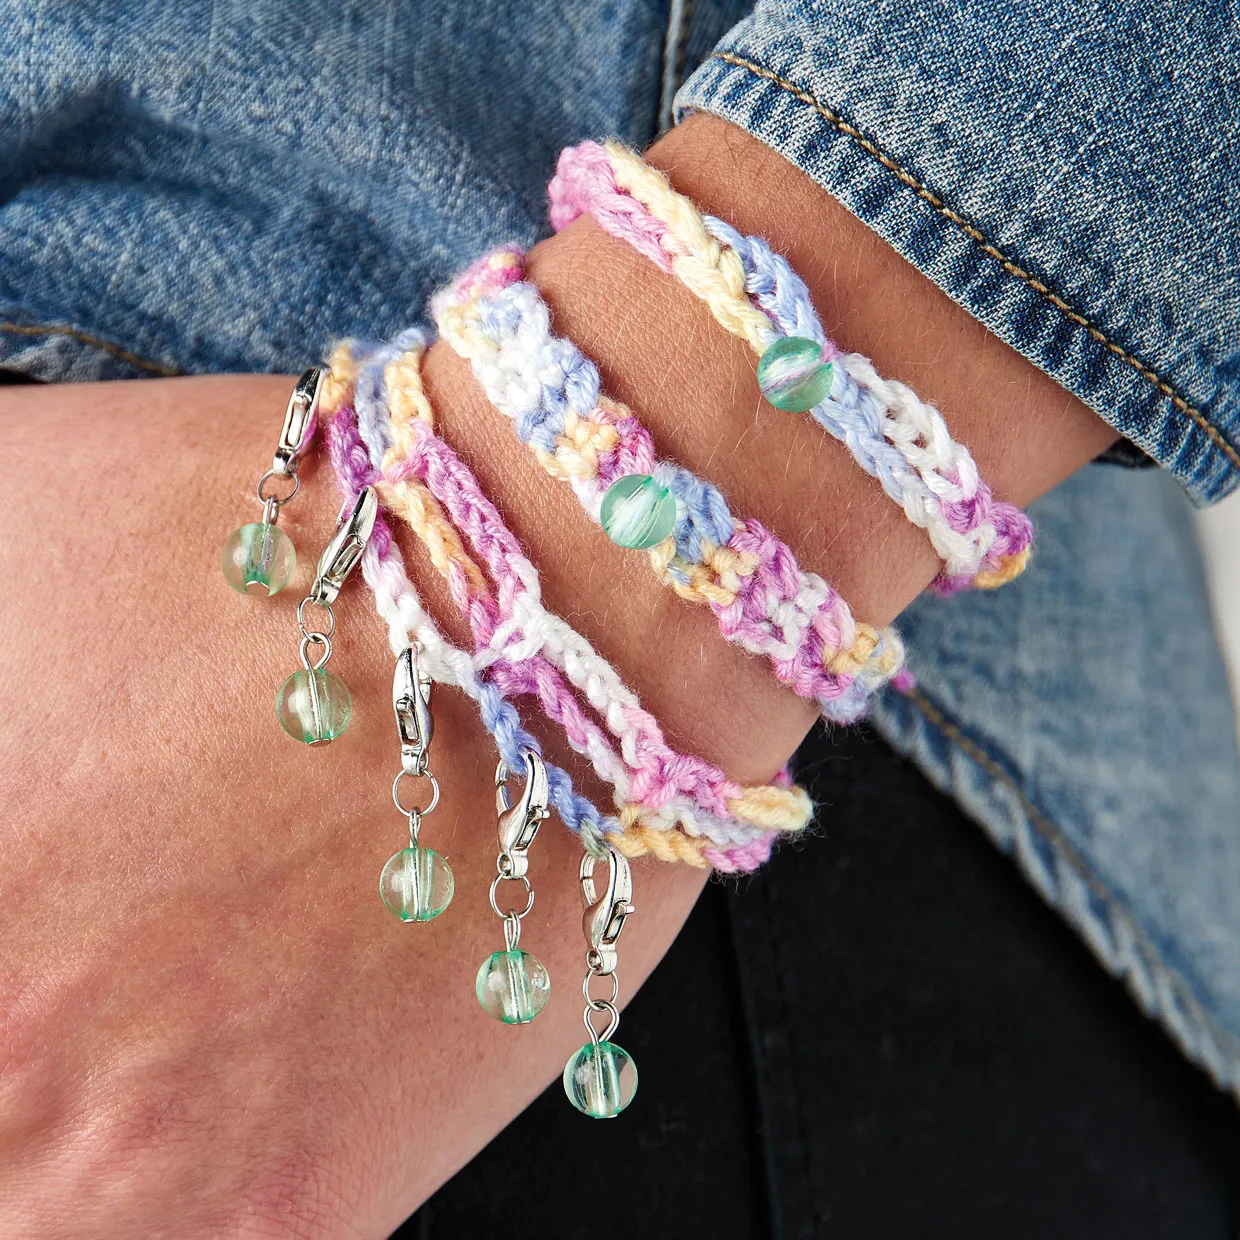 Free crochet friendship bracelet patterns